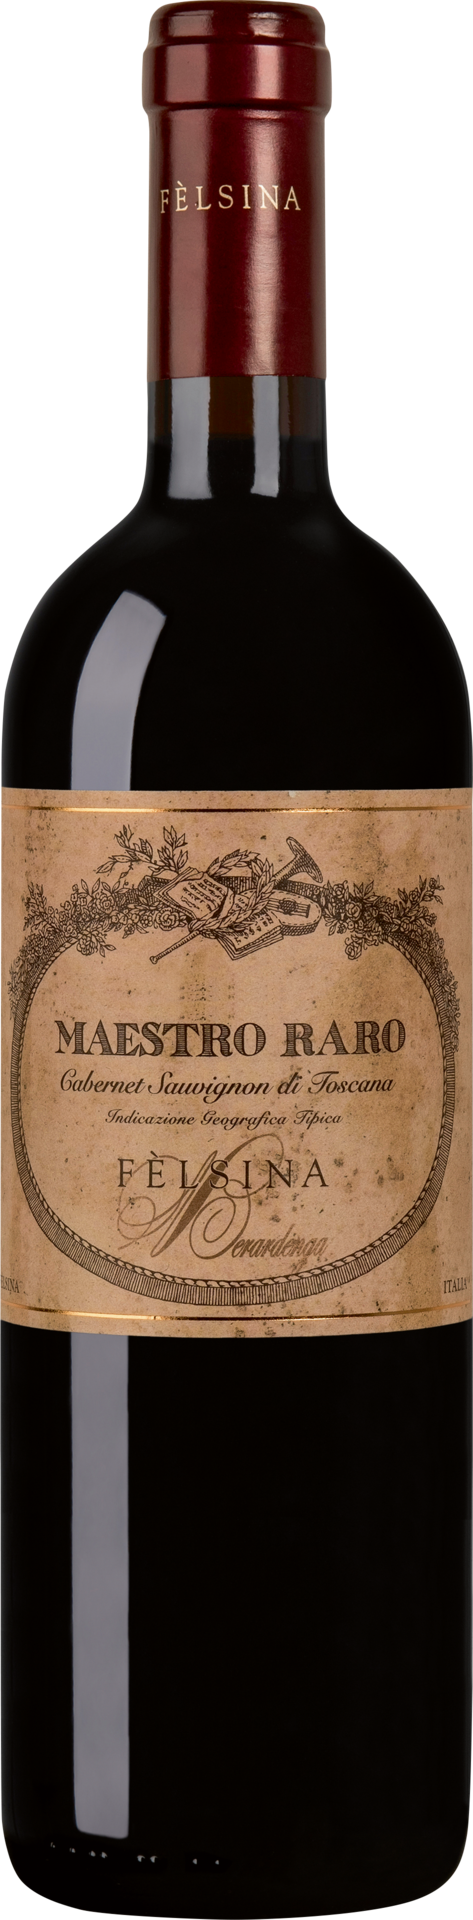 Felsina Maestro Raro - 2018